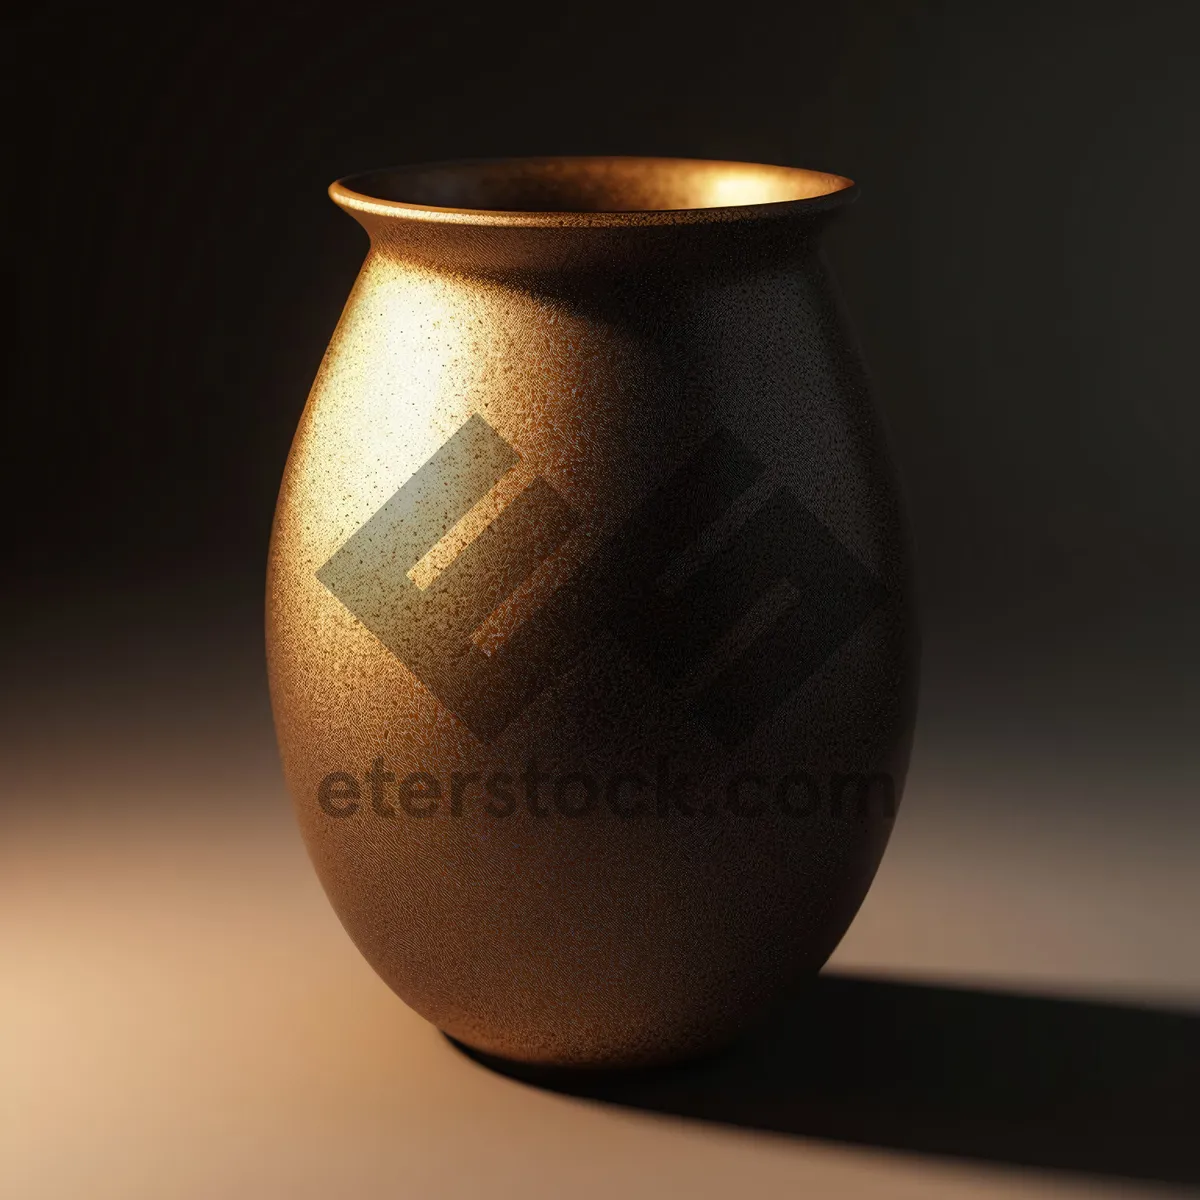 Picture of Ceramic tea mug with breakfast beverage